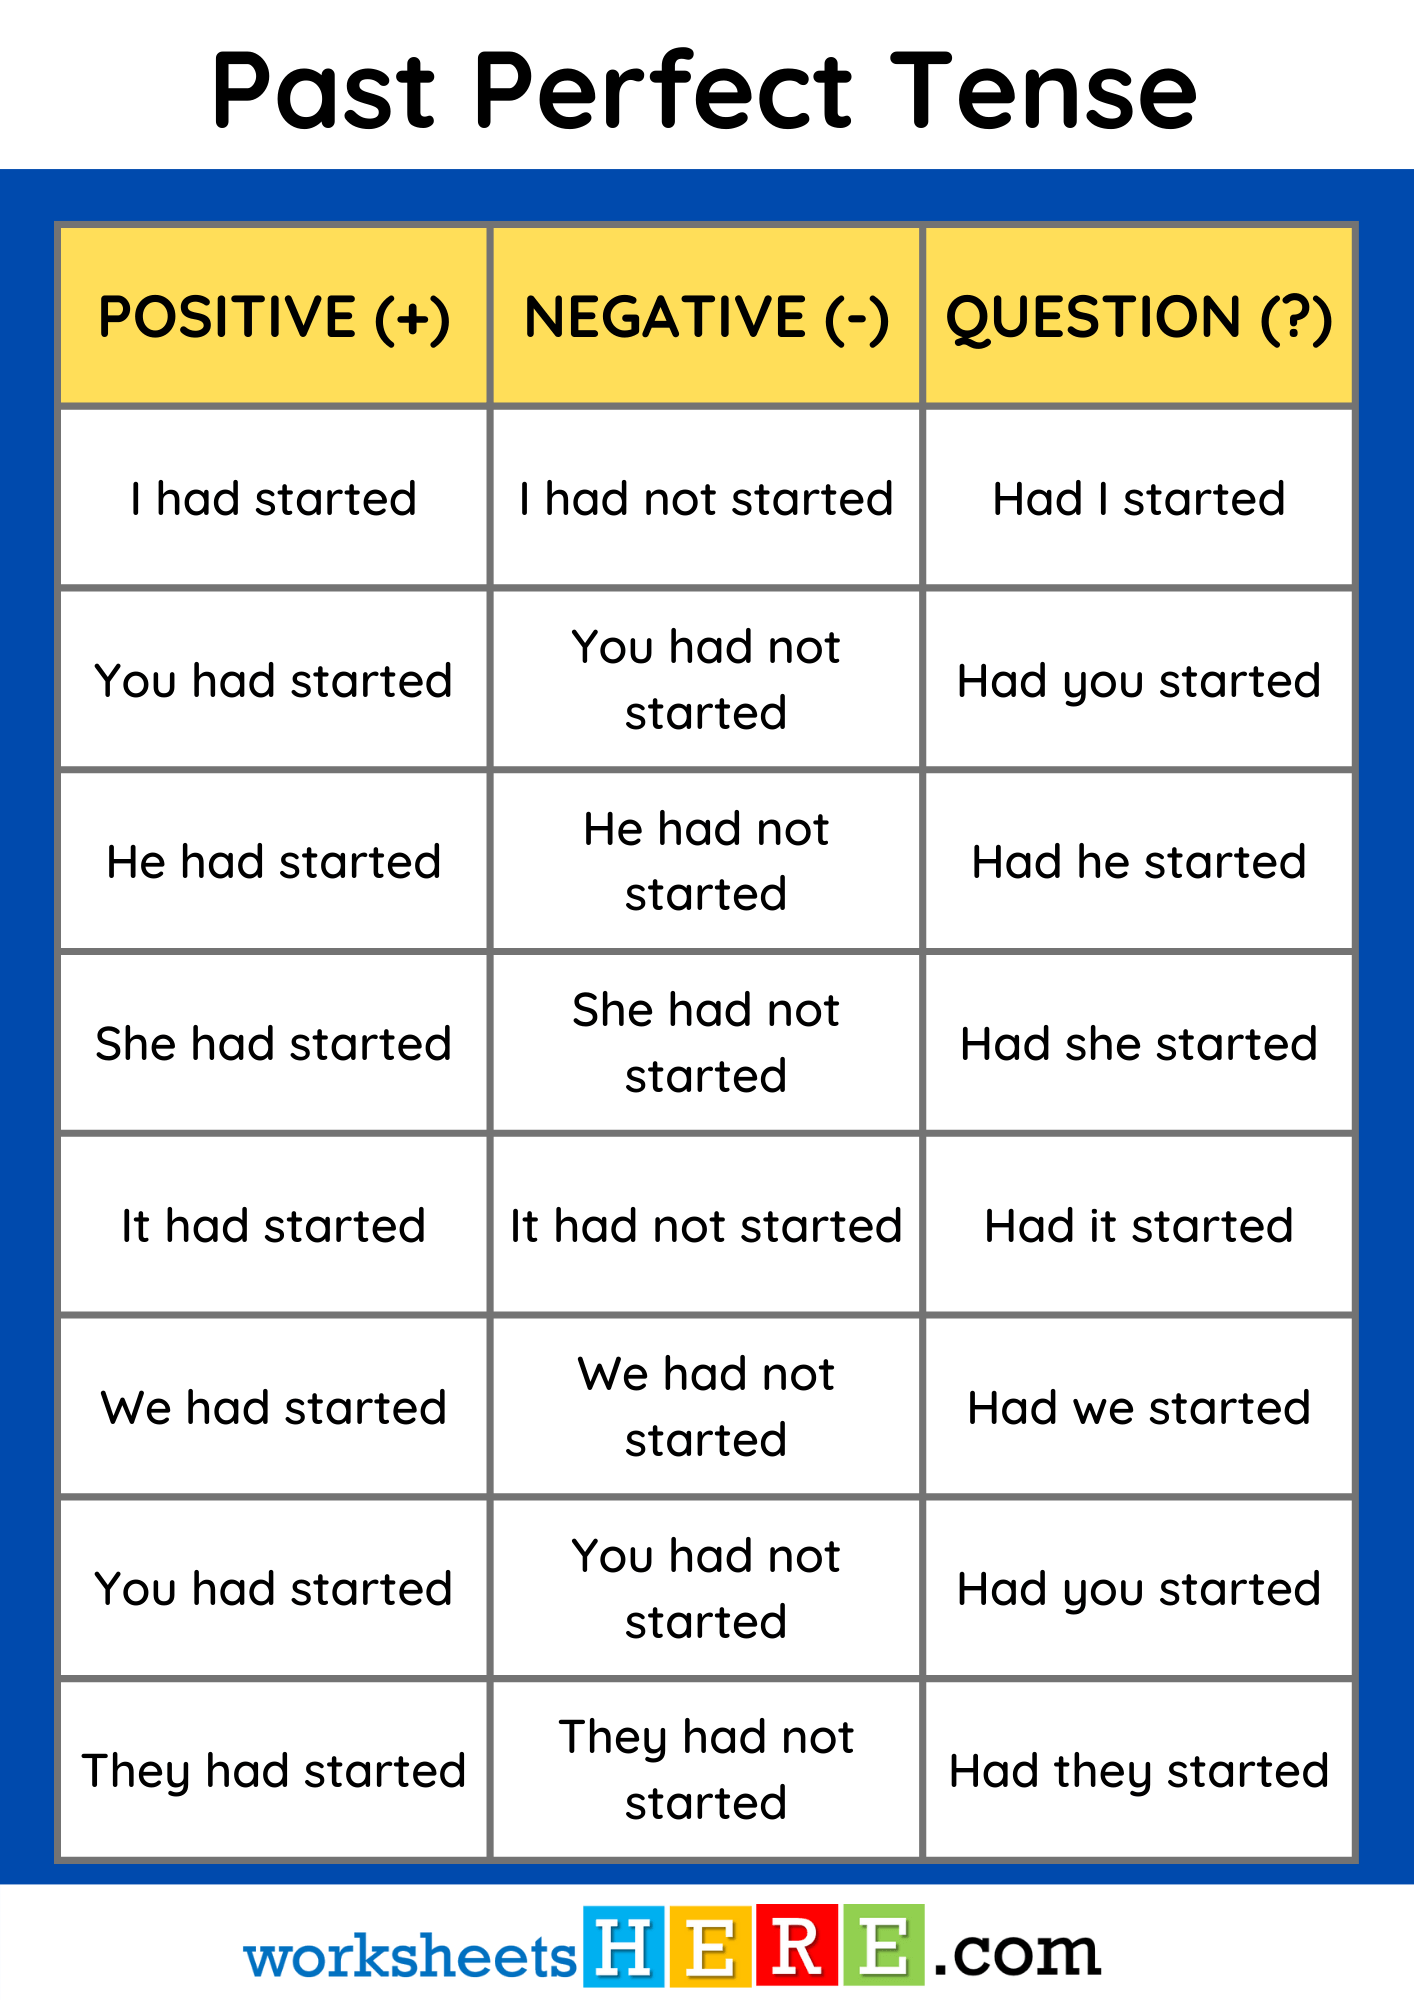 Past Perfect Tense Positive Negative and Question Form Sentences PDF Worksheet